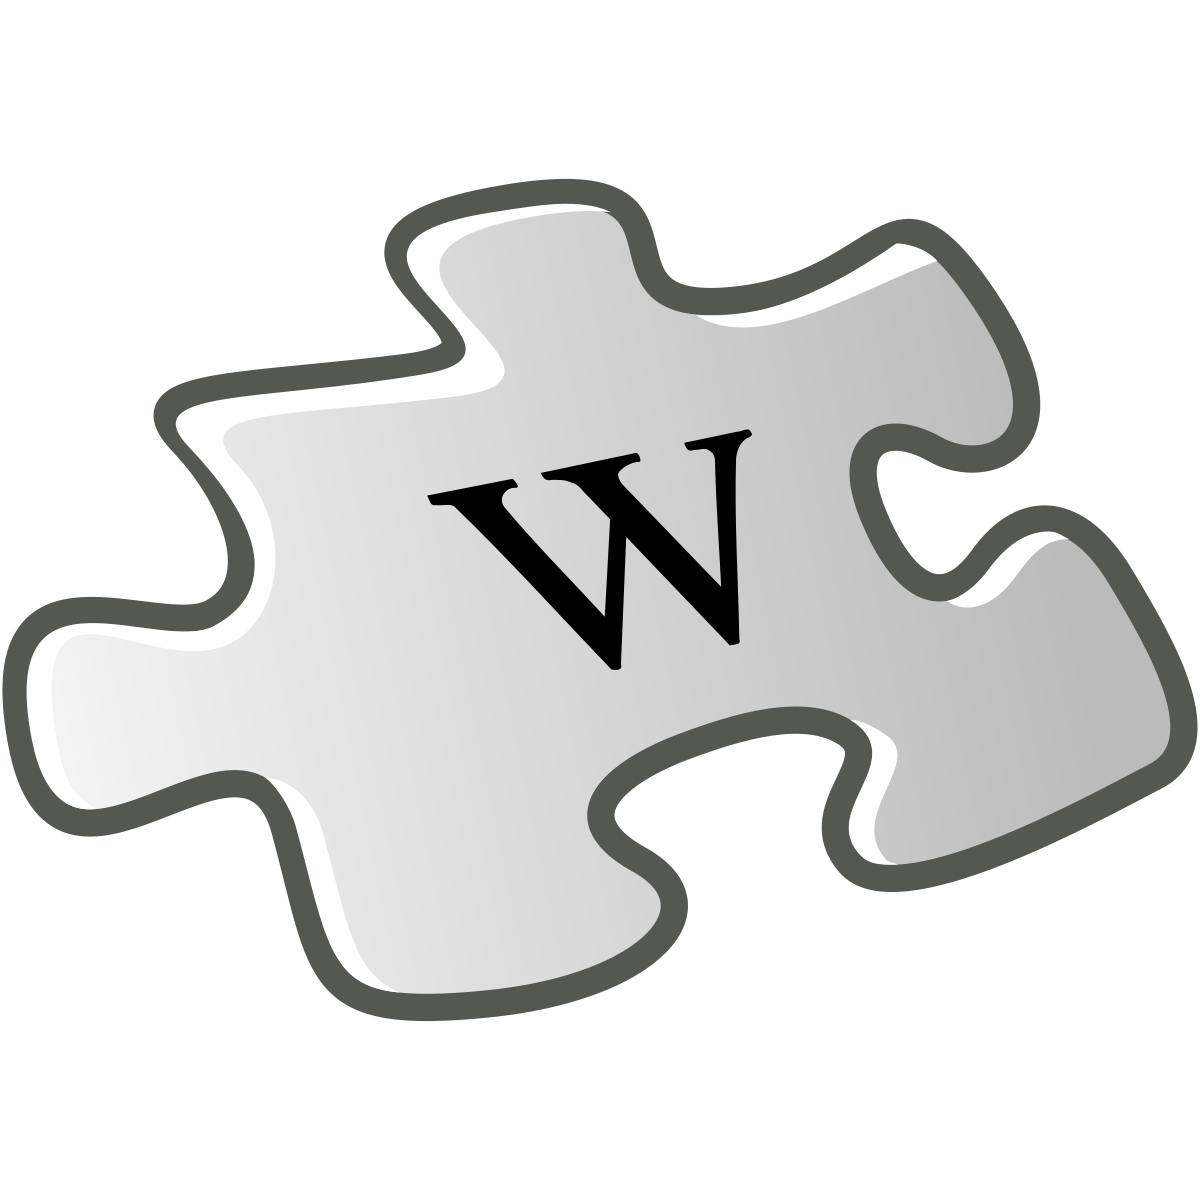 Https www wikipedia. Иконка Wiki. Вики сайты. Вик логотип. Значок Википедии на прозрачном фоне.